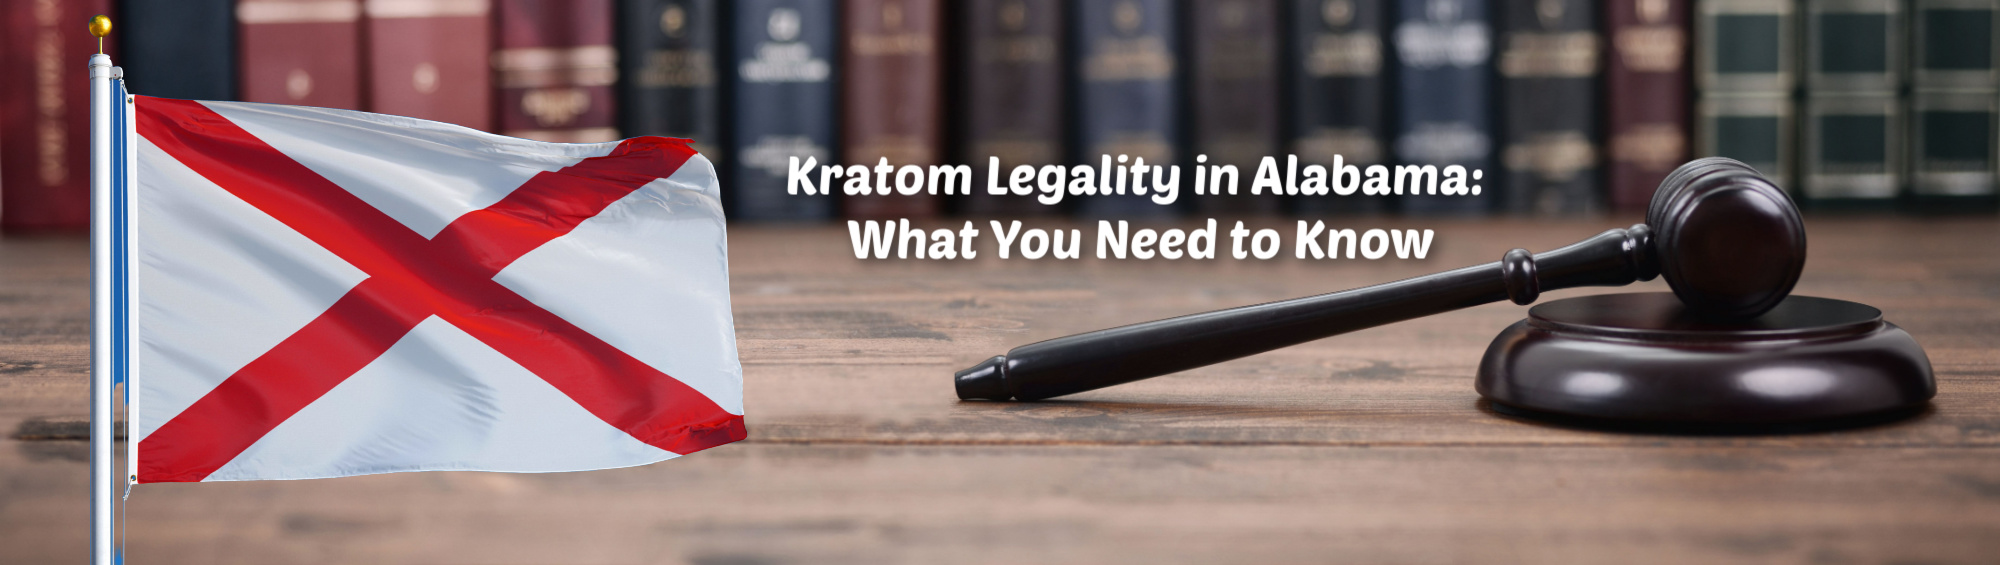 Is Kratom Legal in Alabama?